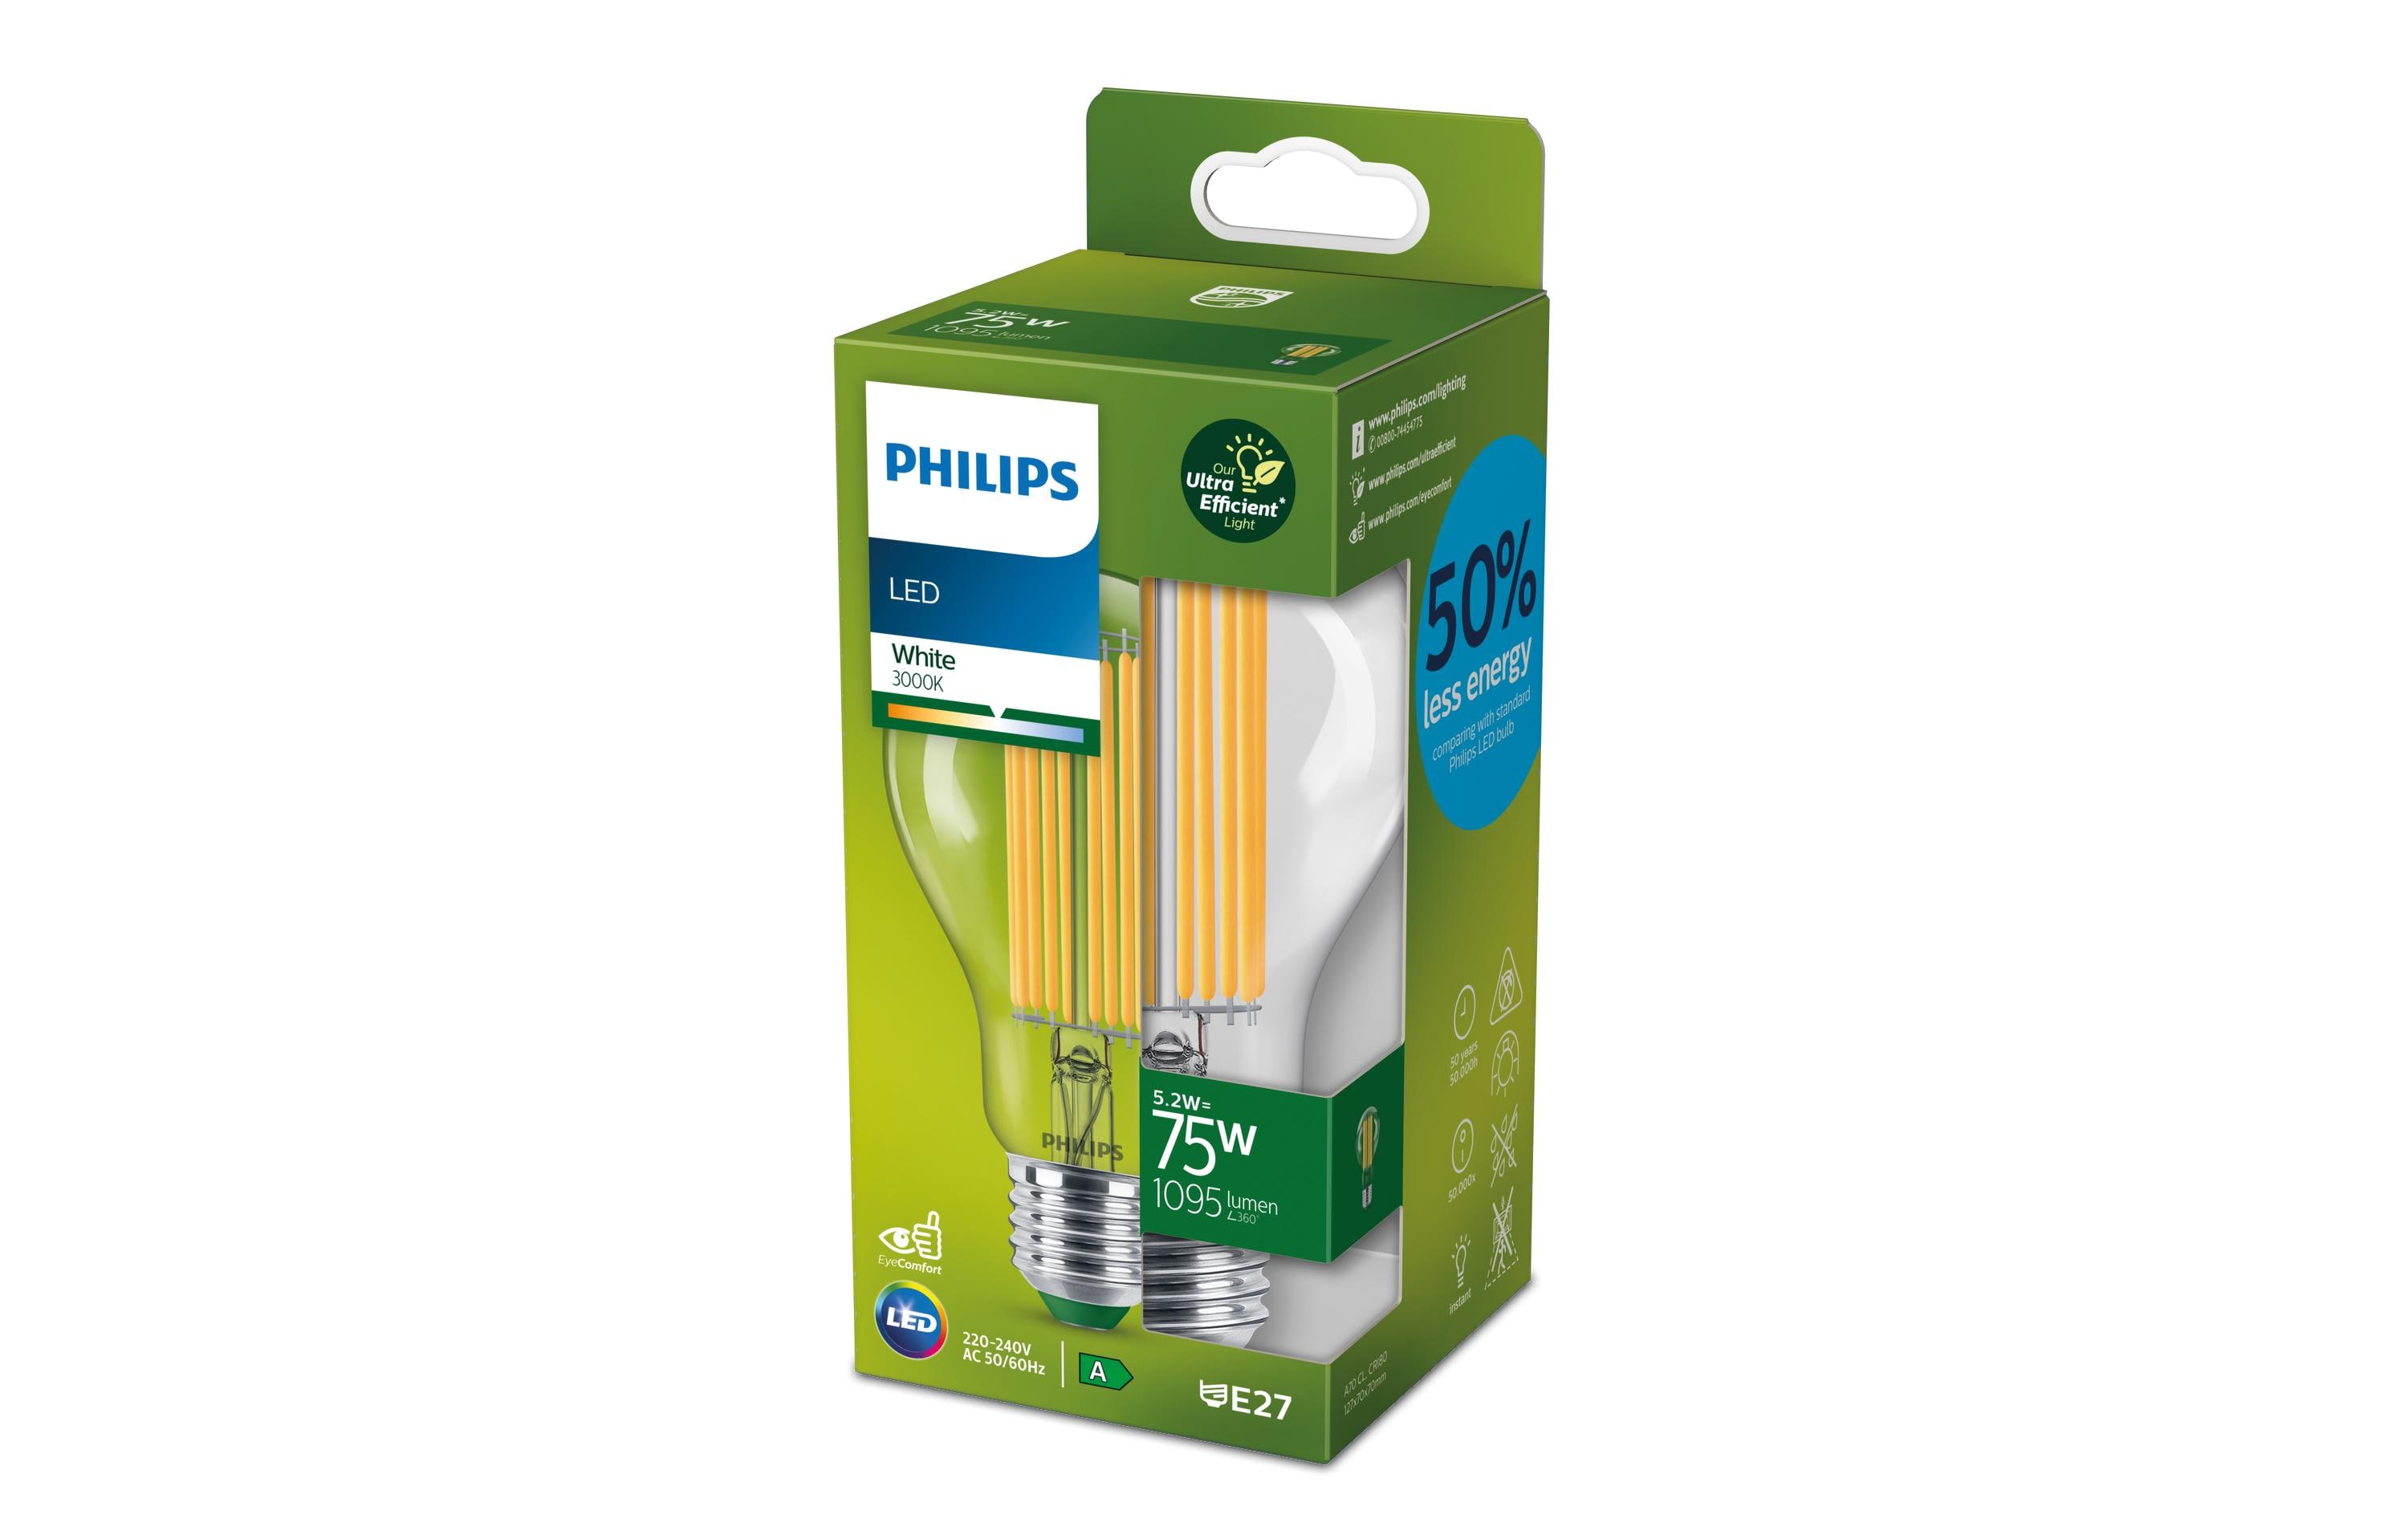 Philips Lampe E27 LED, Ultra-Effizient, Warmweiss, 75W Ersatz